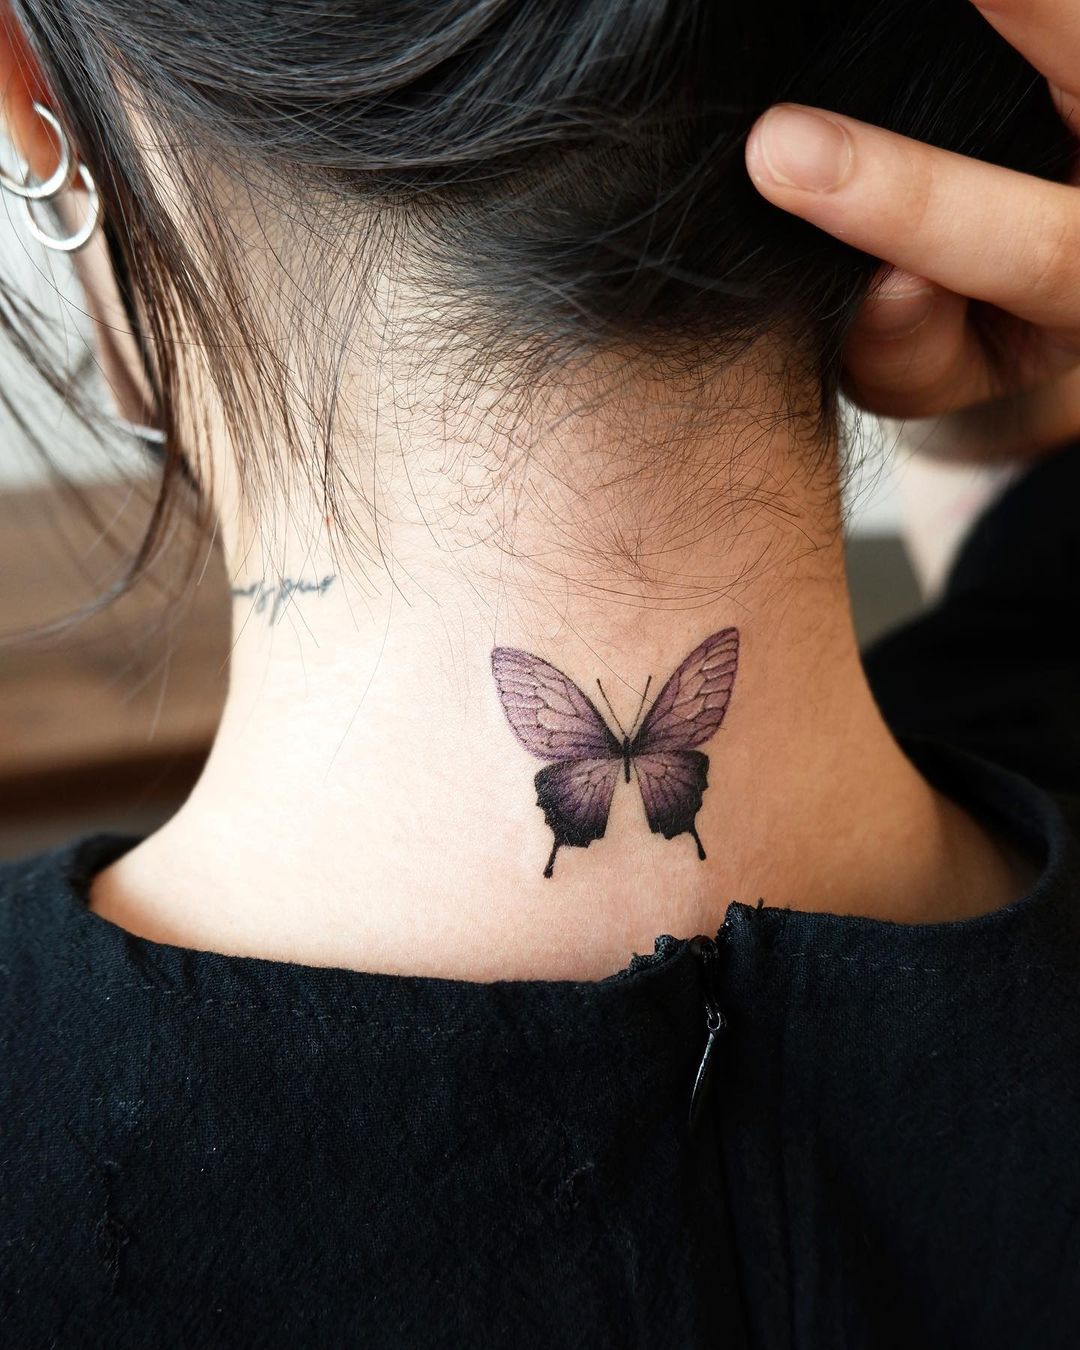 Maxupdatestv Butterfly tattoo designs Butterfly tattoo Butterfly back tattoo